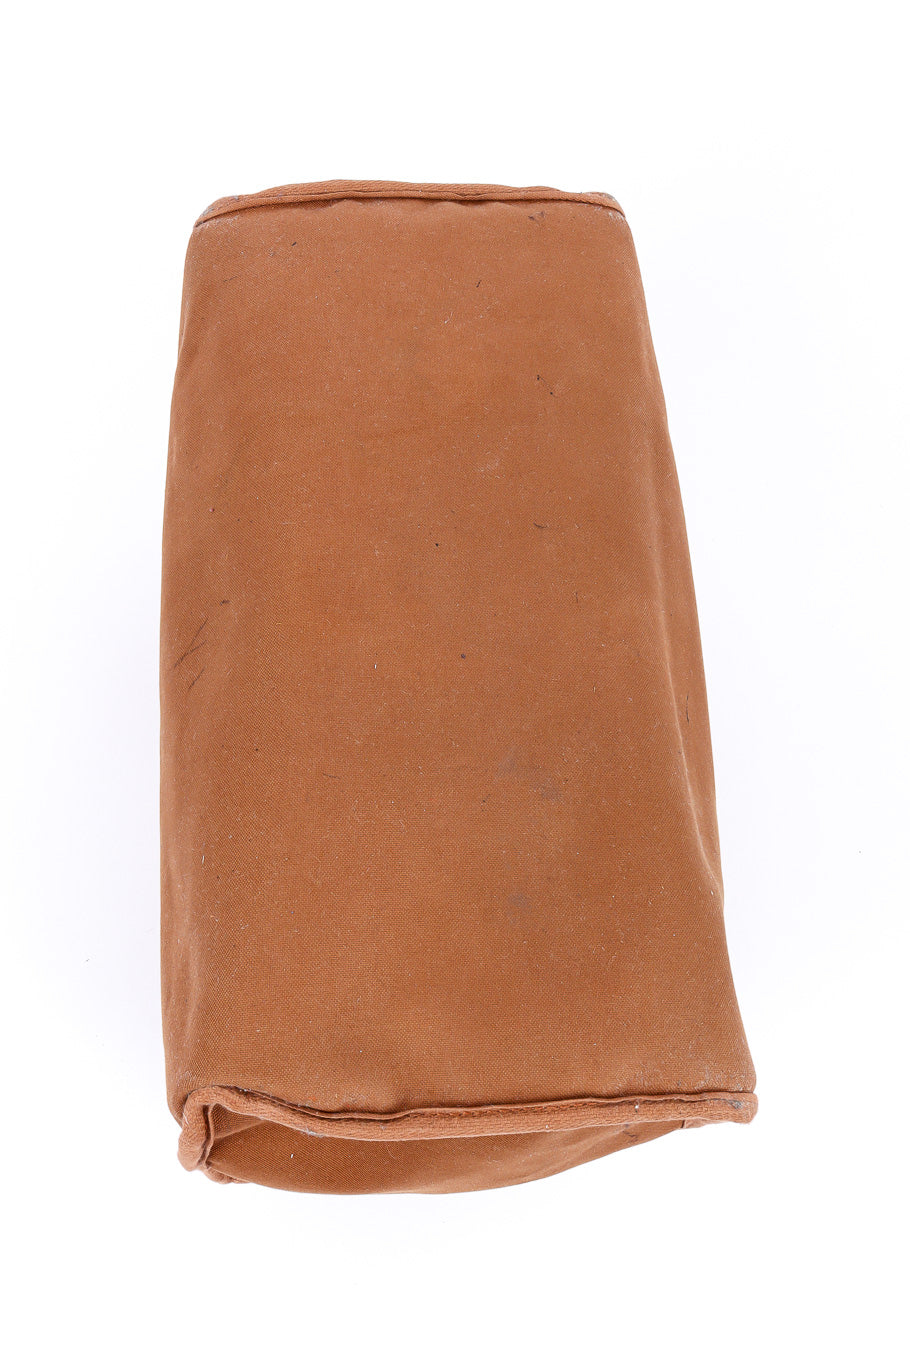 Vintage Louis Vuitton Classic Monogram Speedy 35 Bag inner lining with marks @Recessla